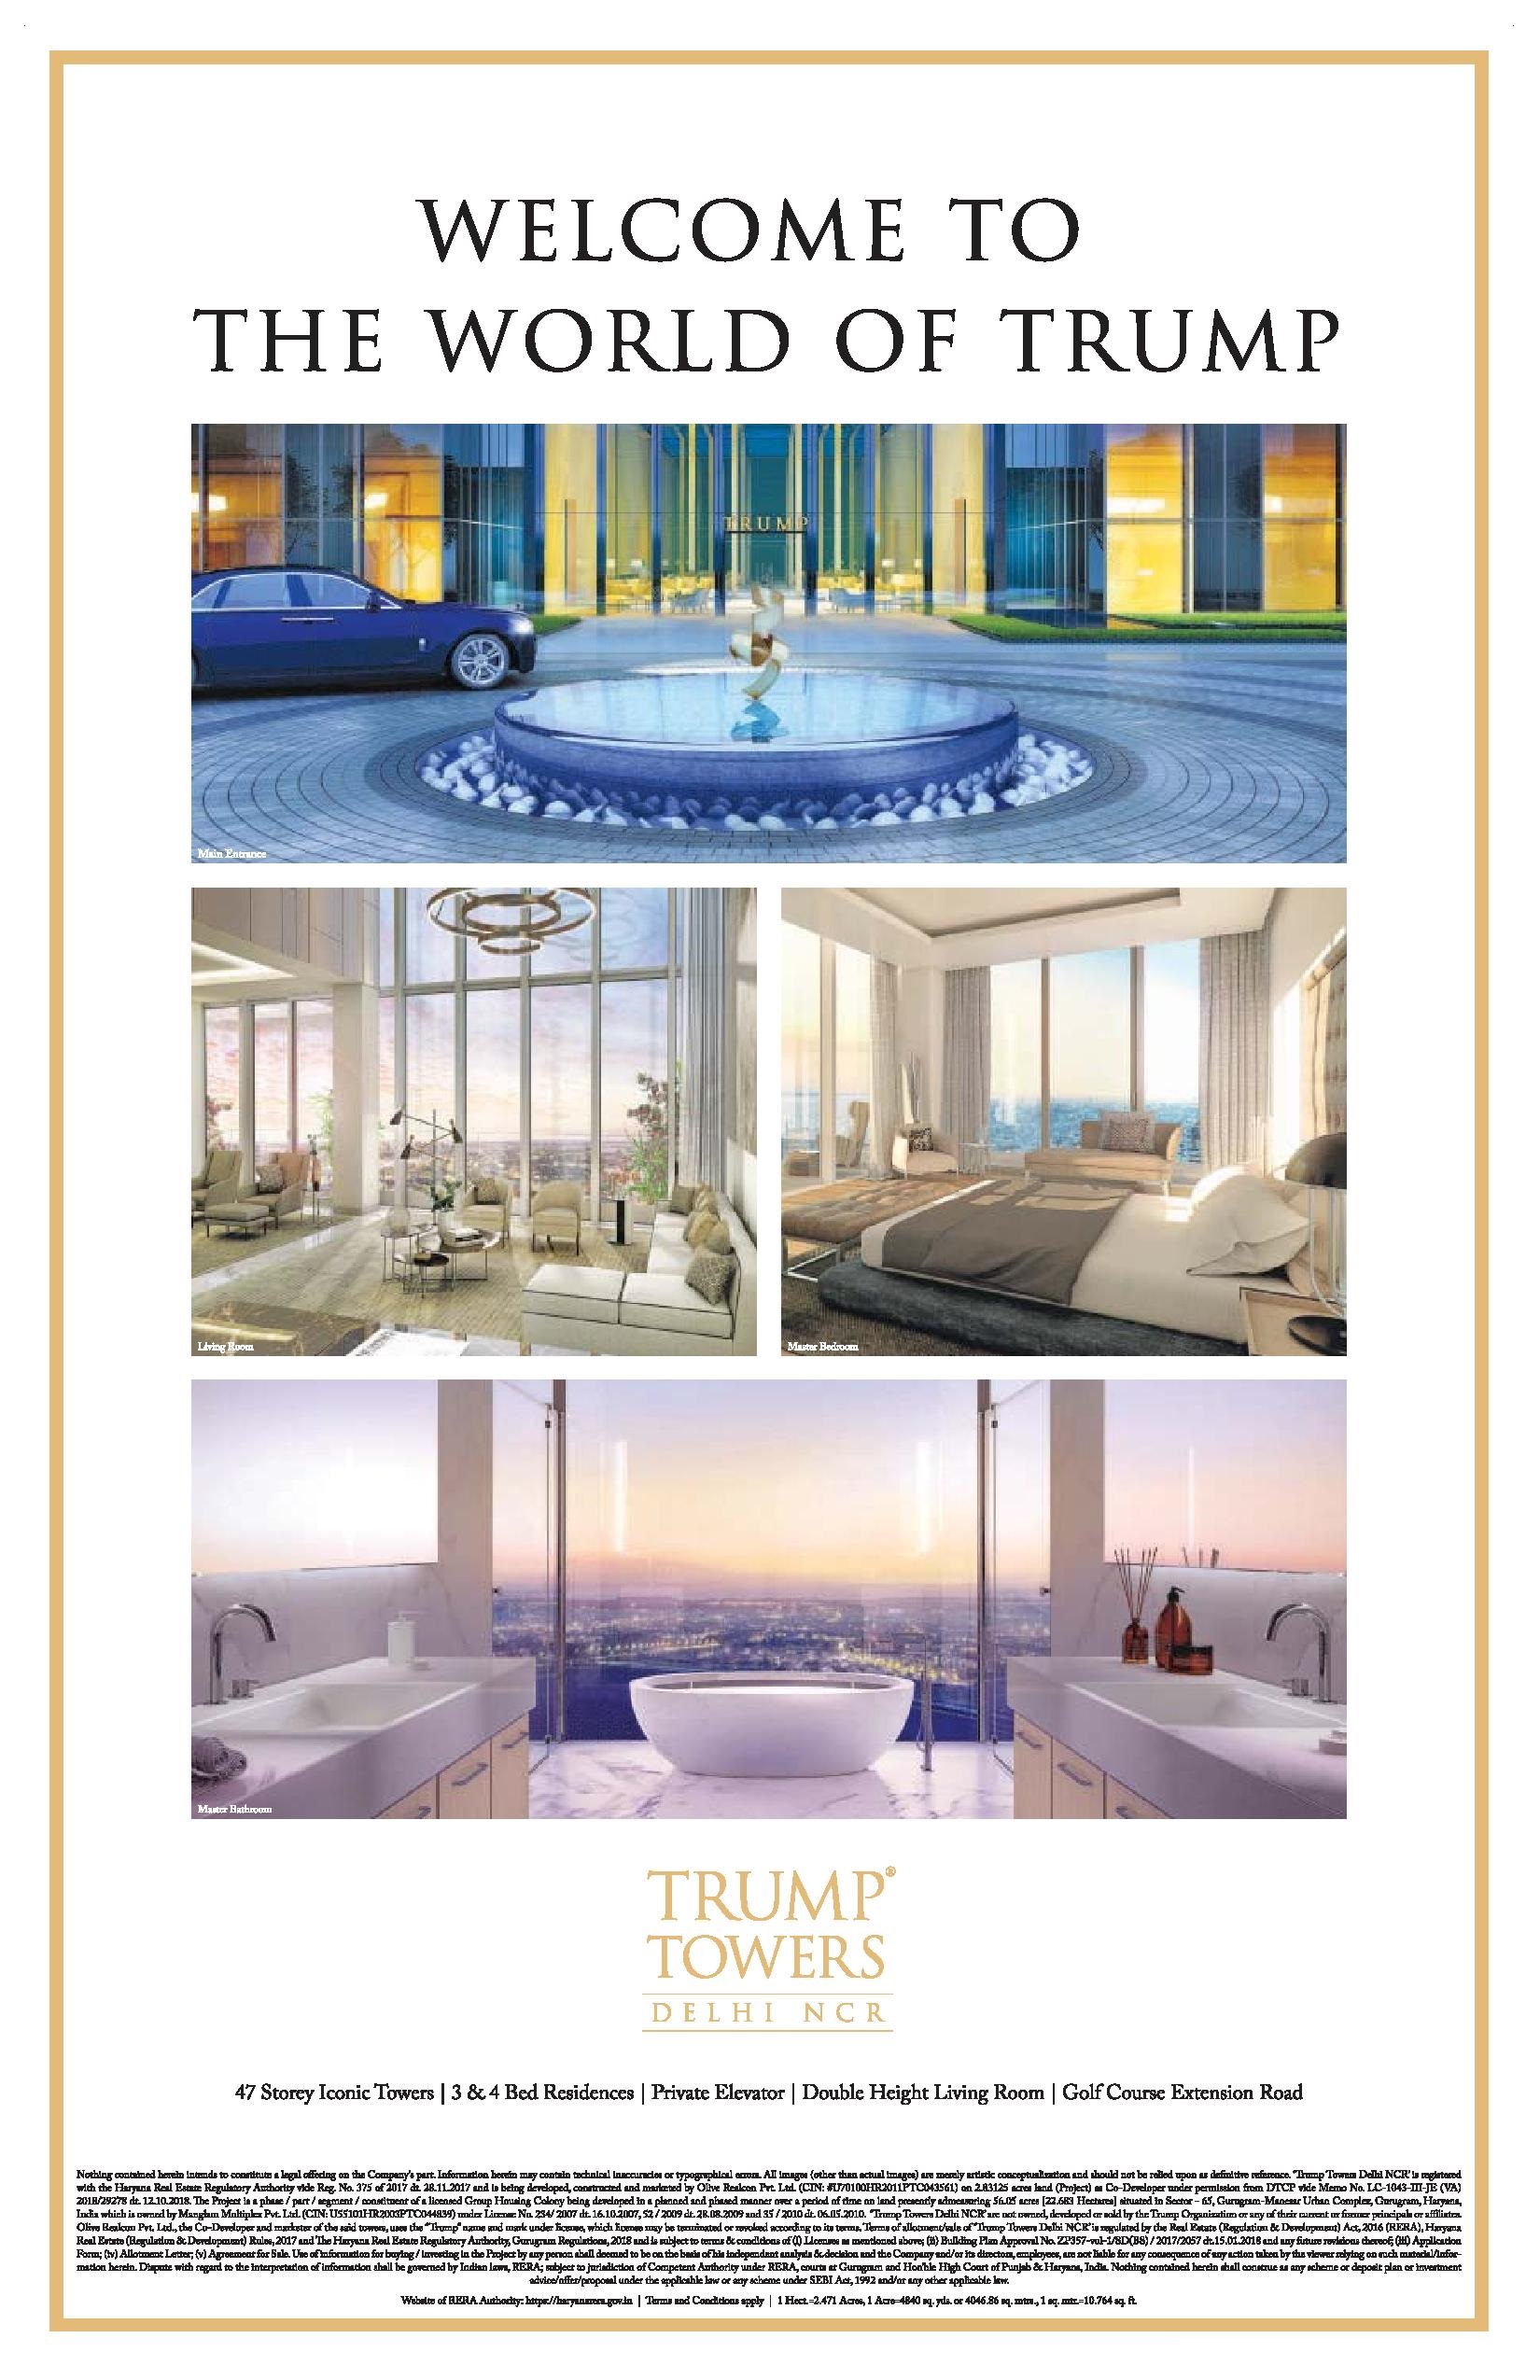 Trump Towers introducing 3 & 4 bedroom residences in Gurgaon